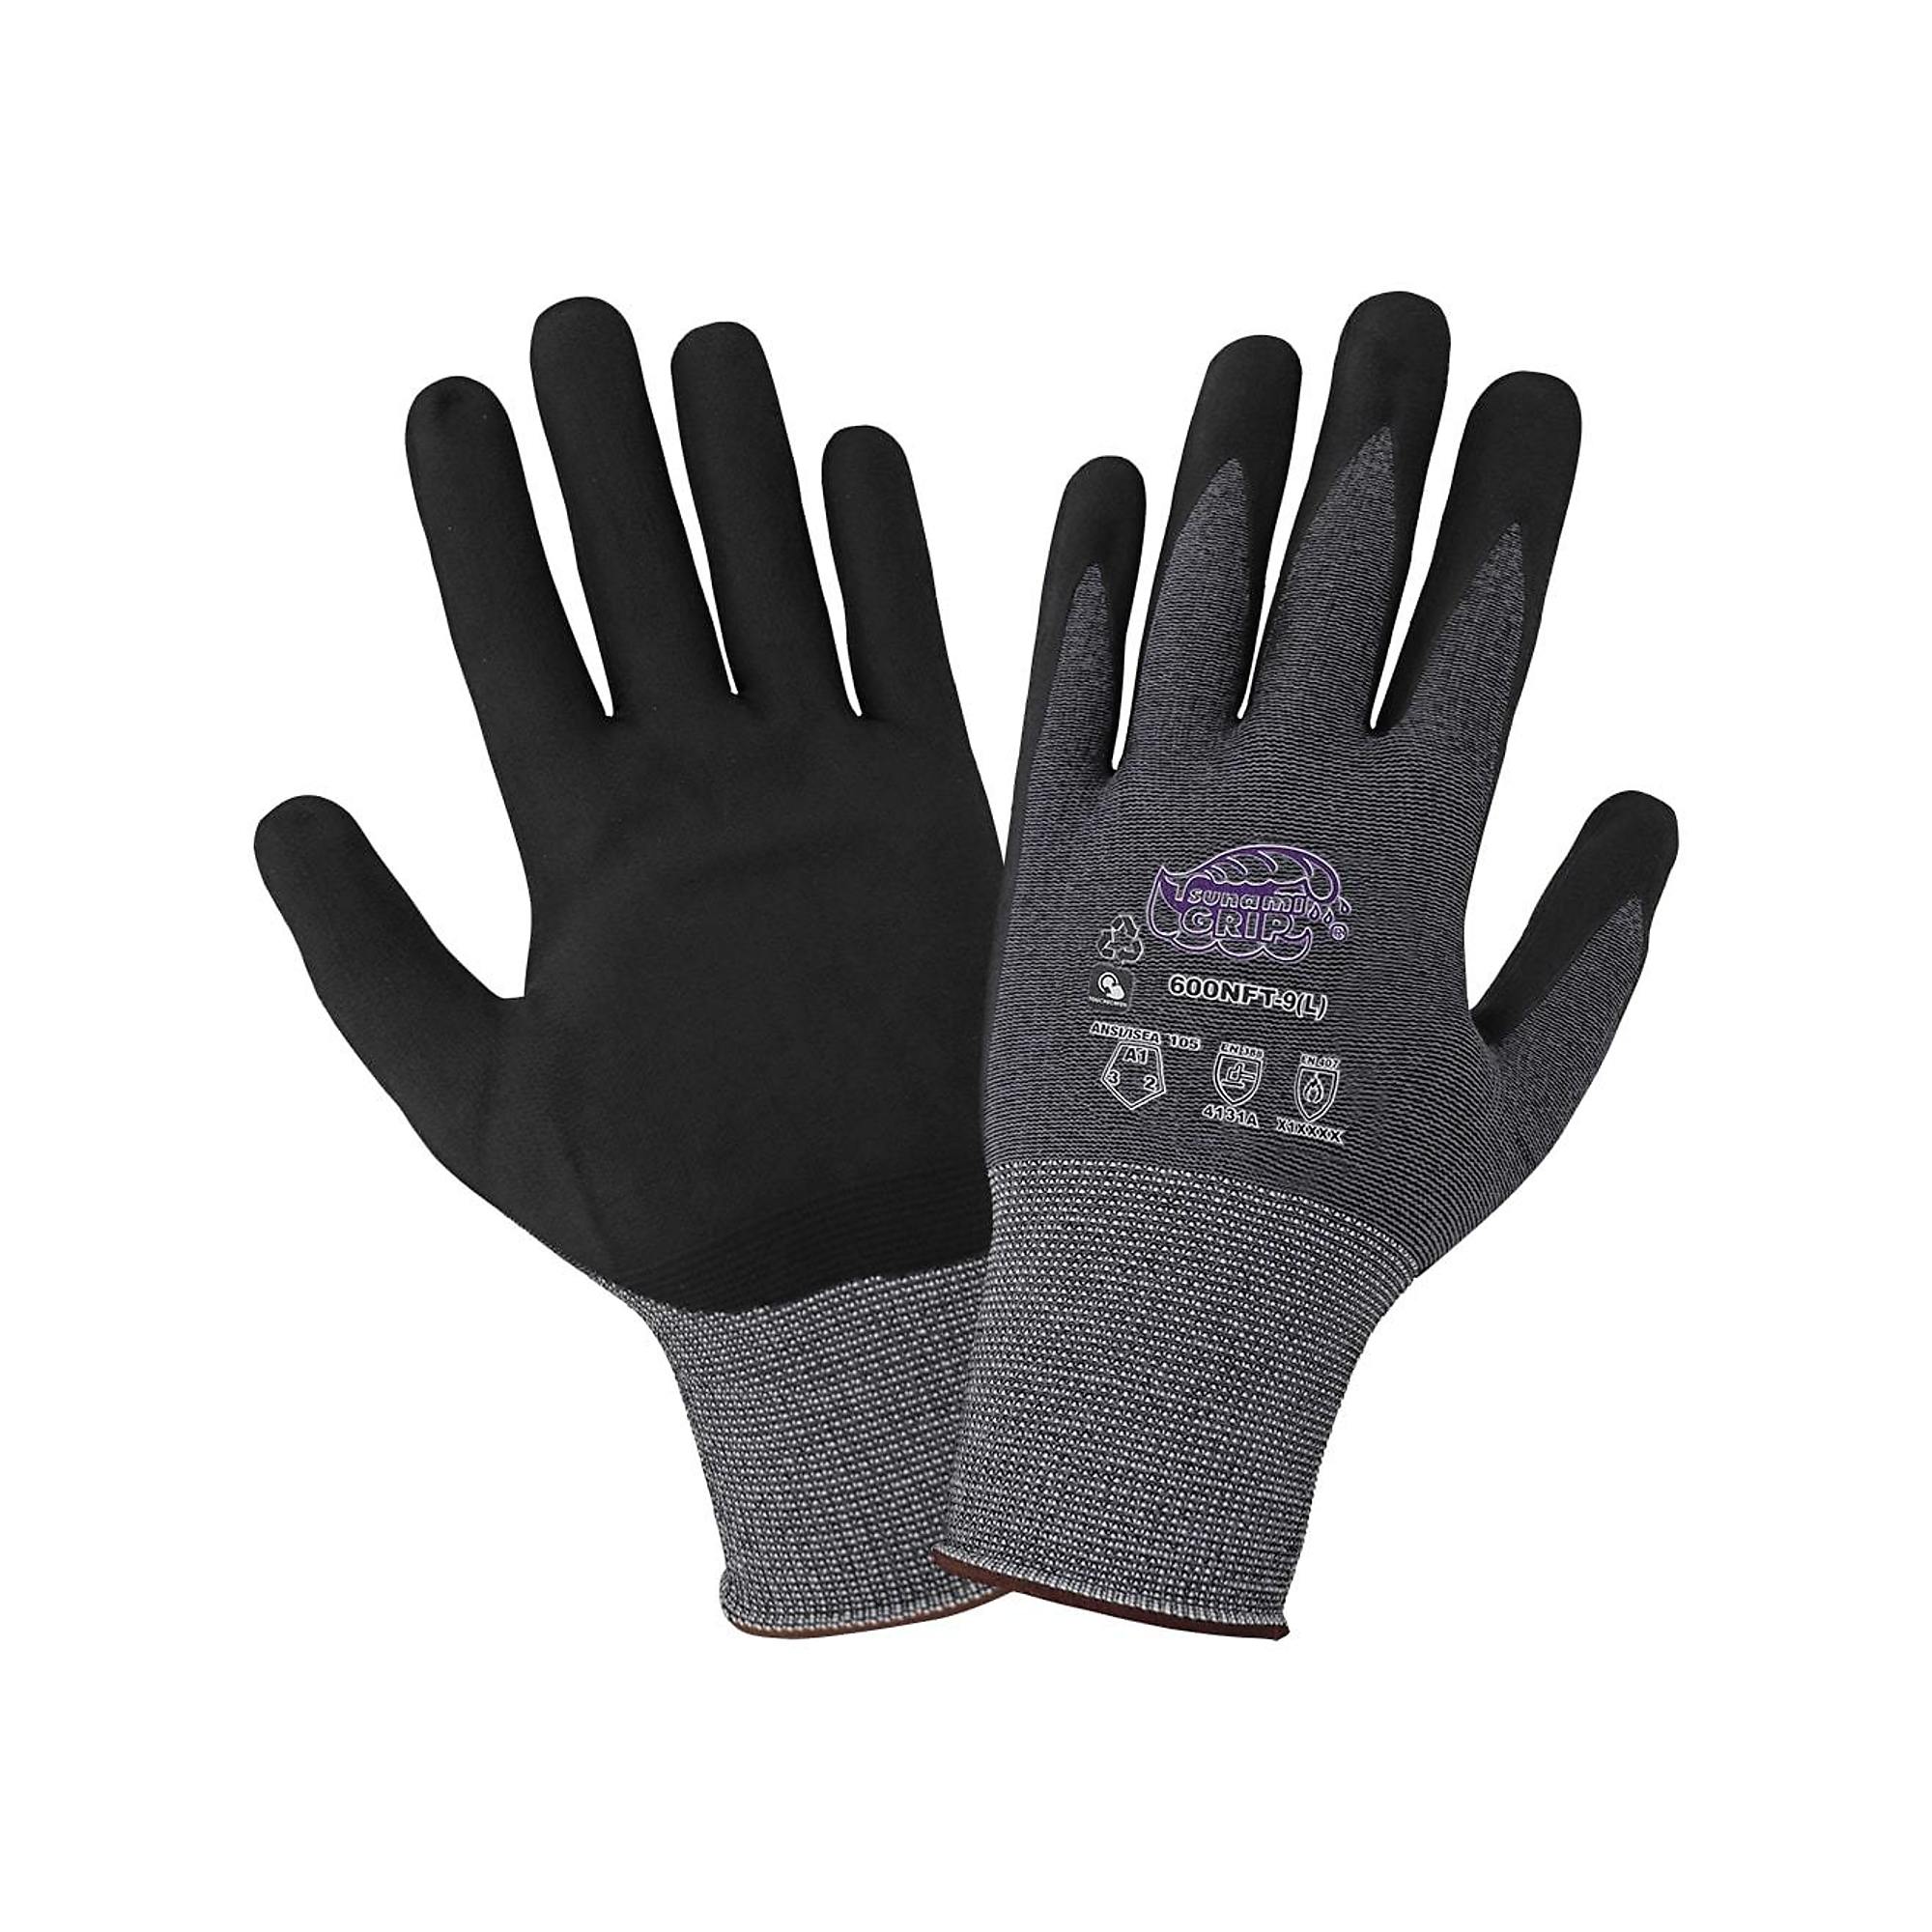 Global Glove Tsunami Grip , Tsunami Grip Lightweight, Foam Nitrile Gloves - 12 Pairs, Size XL, Color Gray, Included (qty.) 12 Model 600NFT-10(XL)